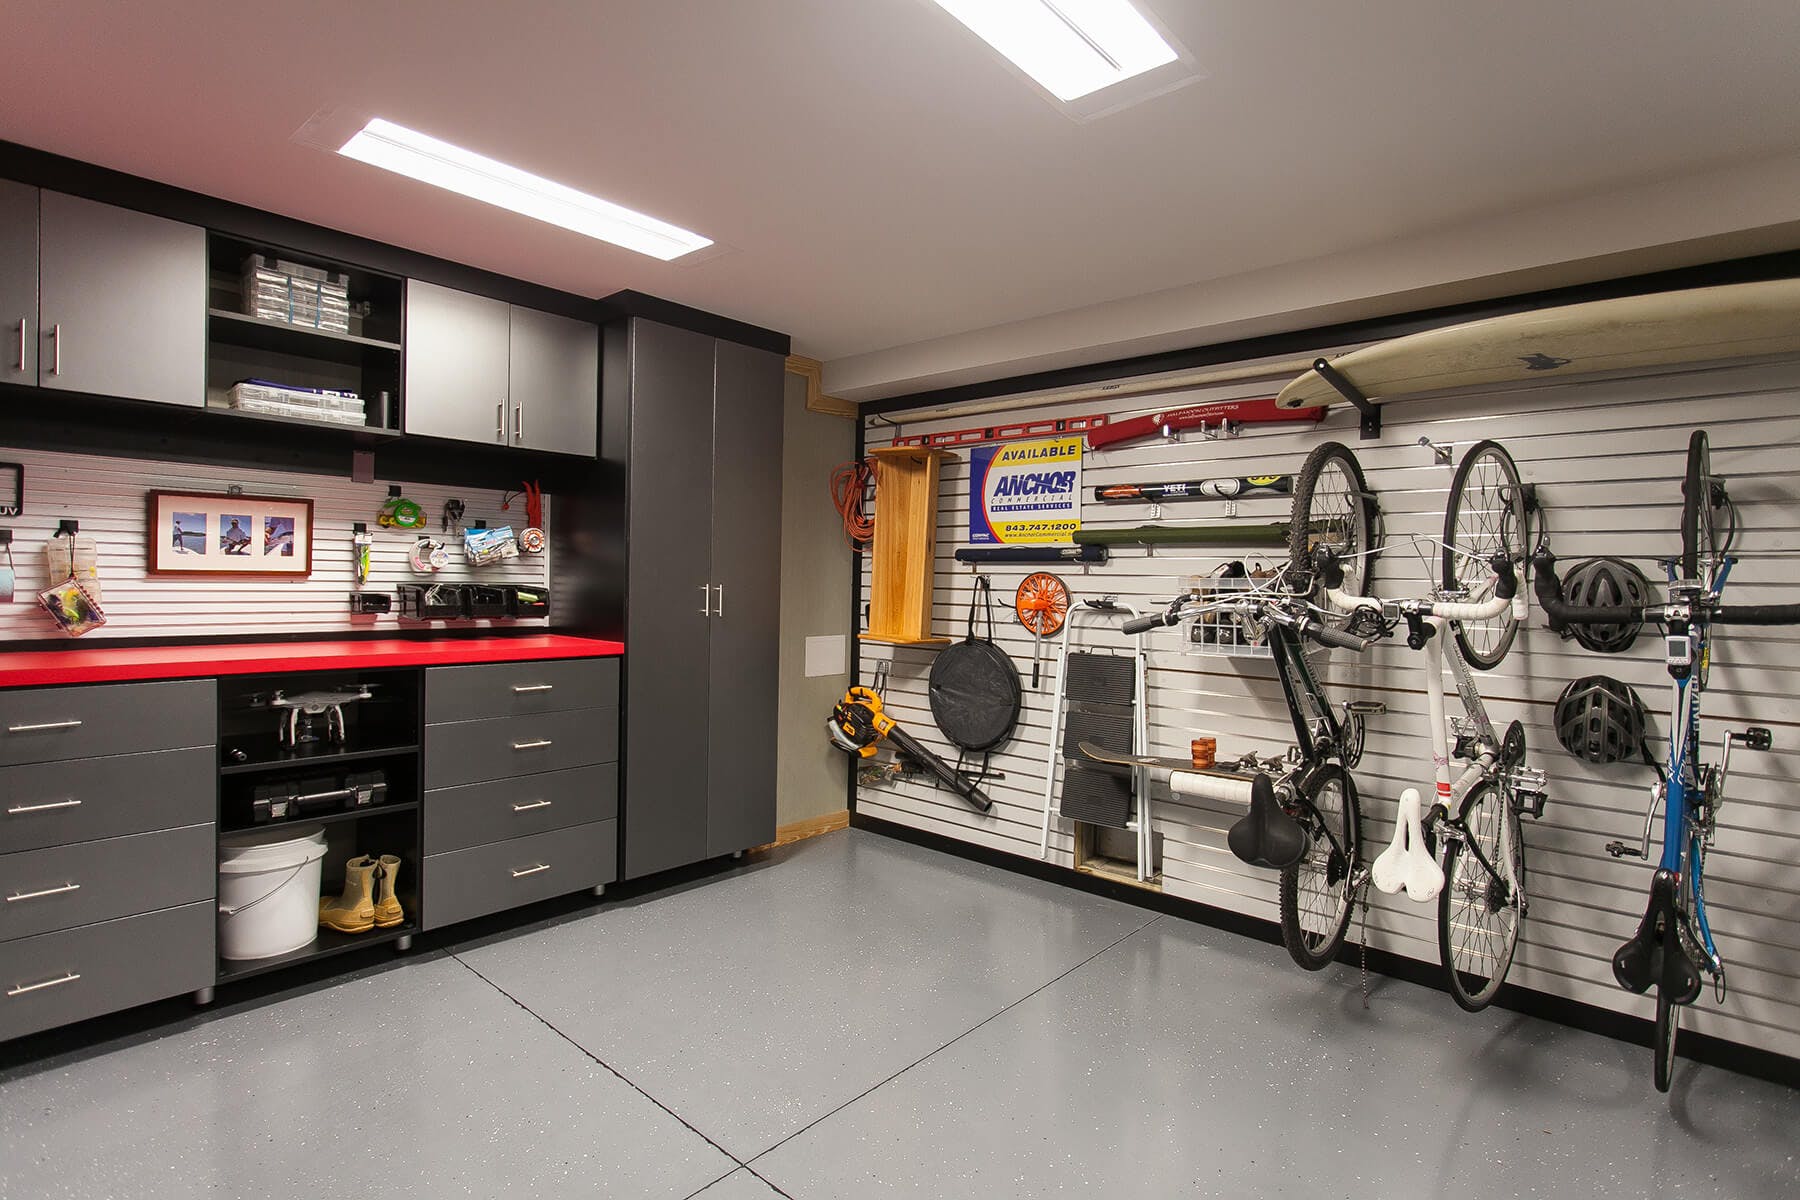 Garage Storage Cabinets, Design and Install